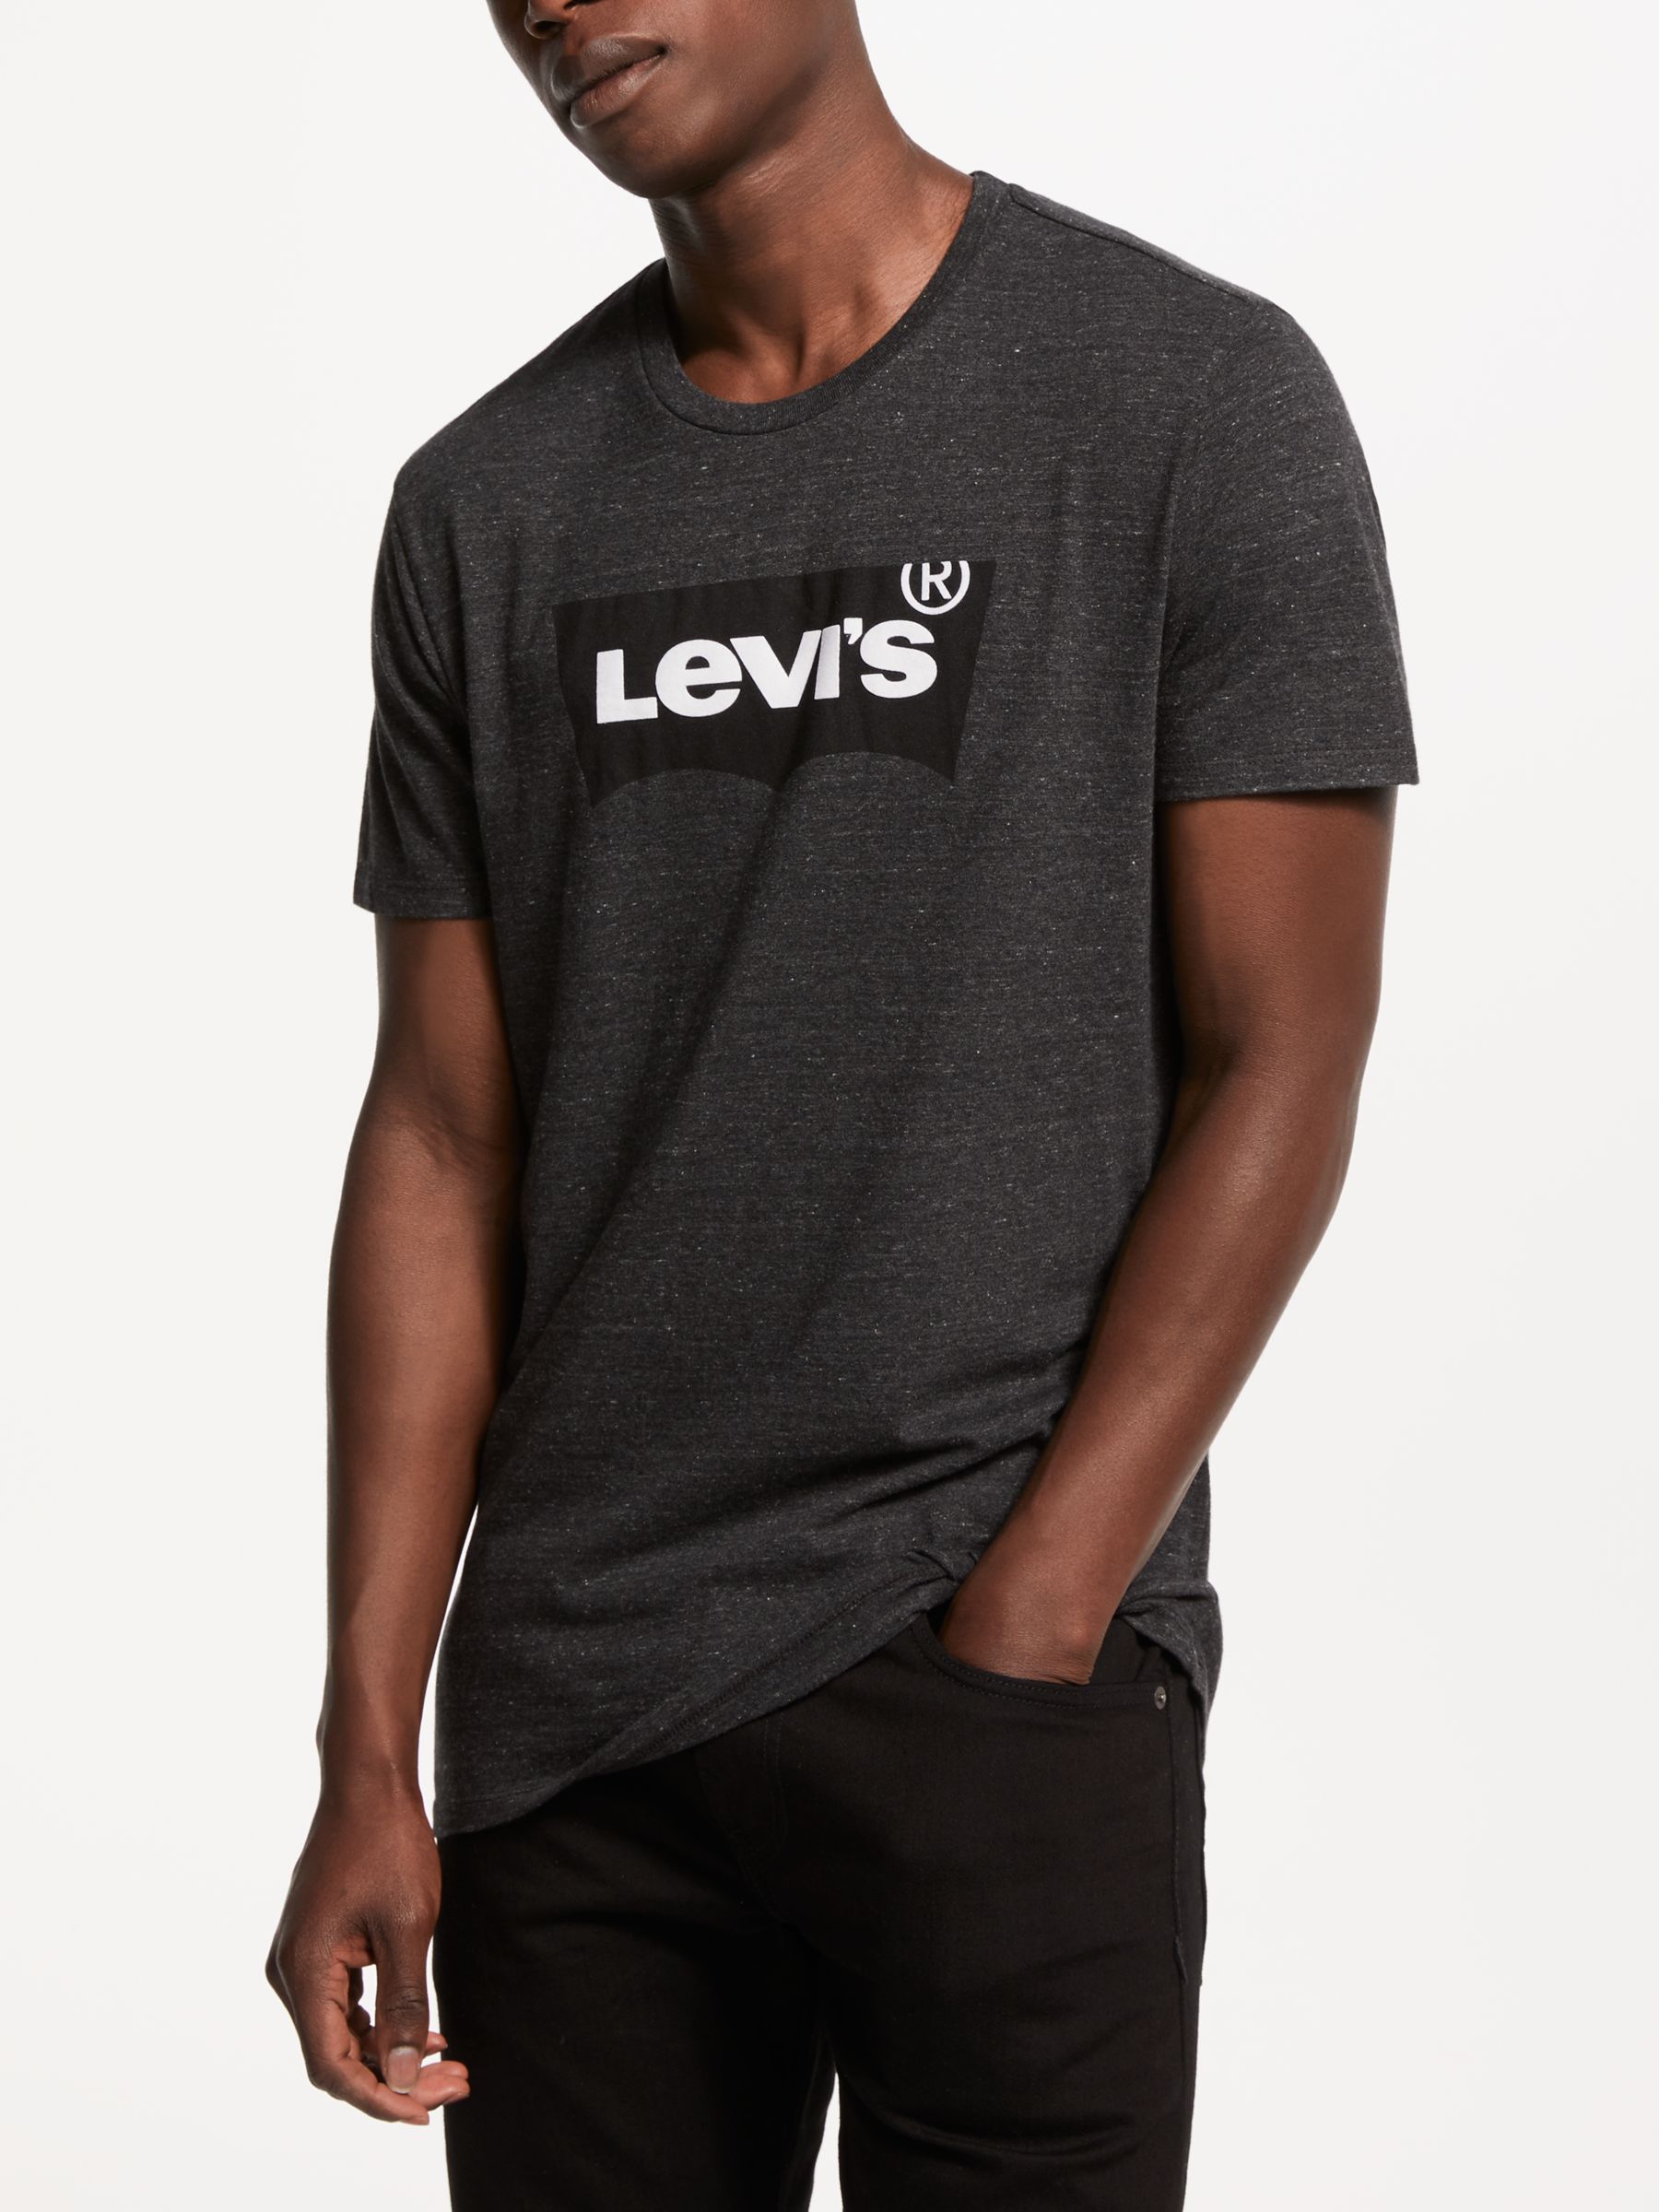 Levi's Housemark Crew Neck T-Shirt at 